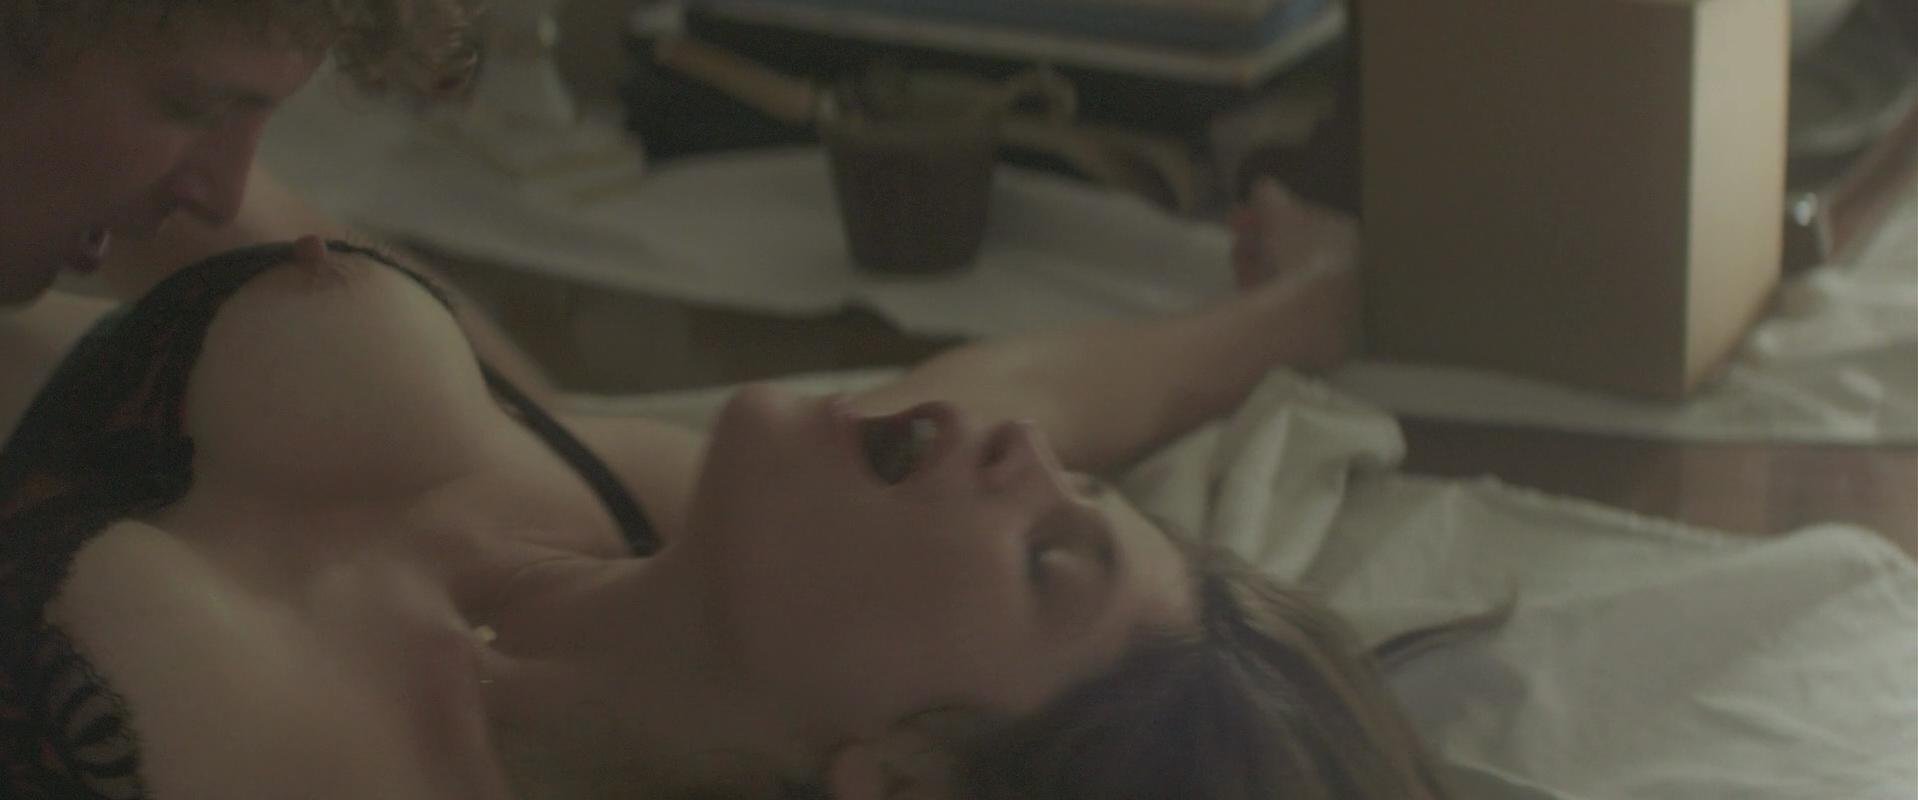 Nude Video Celebs Actress Gemma Arterton